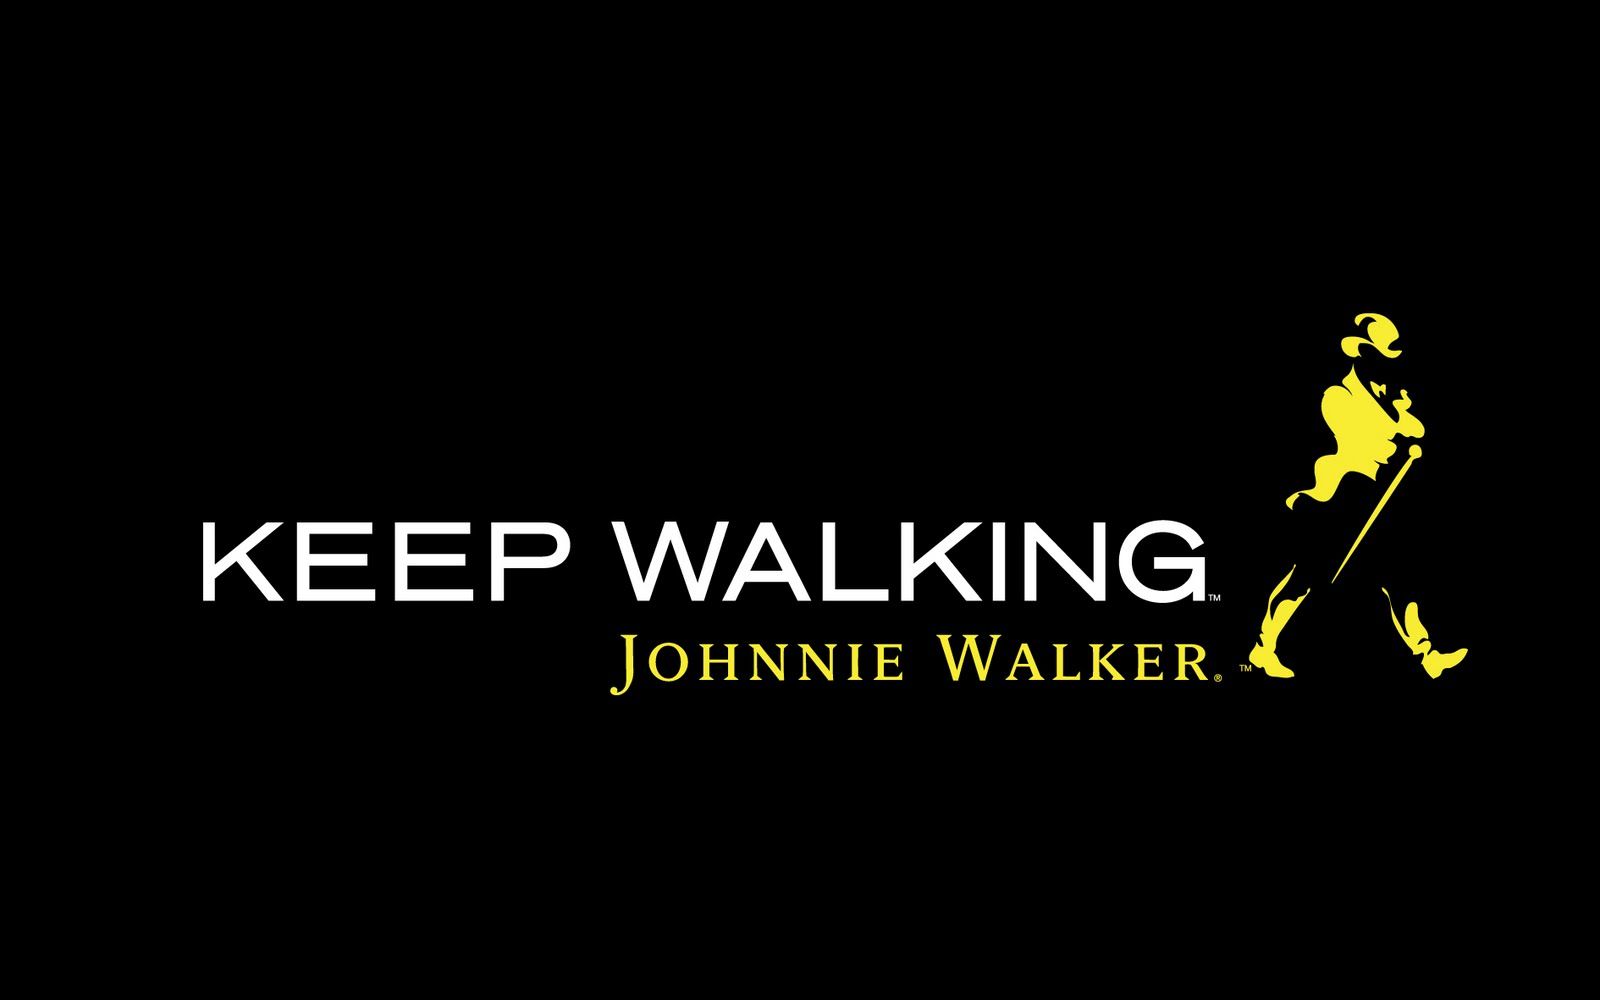 Johnnie Walker Wallpaper HD Desktop Background Image And